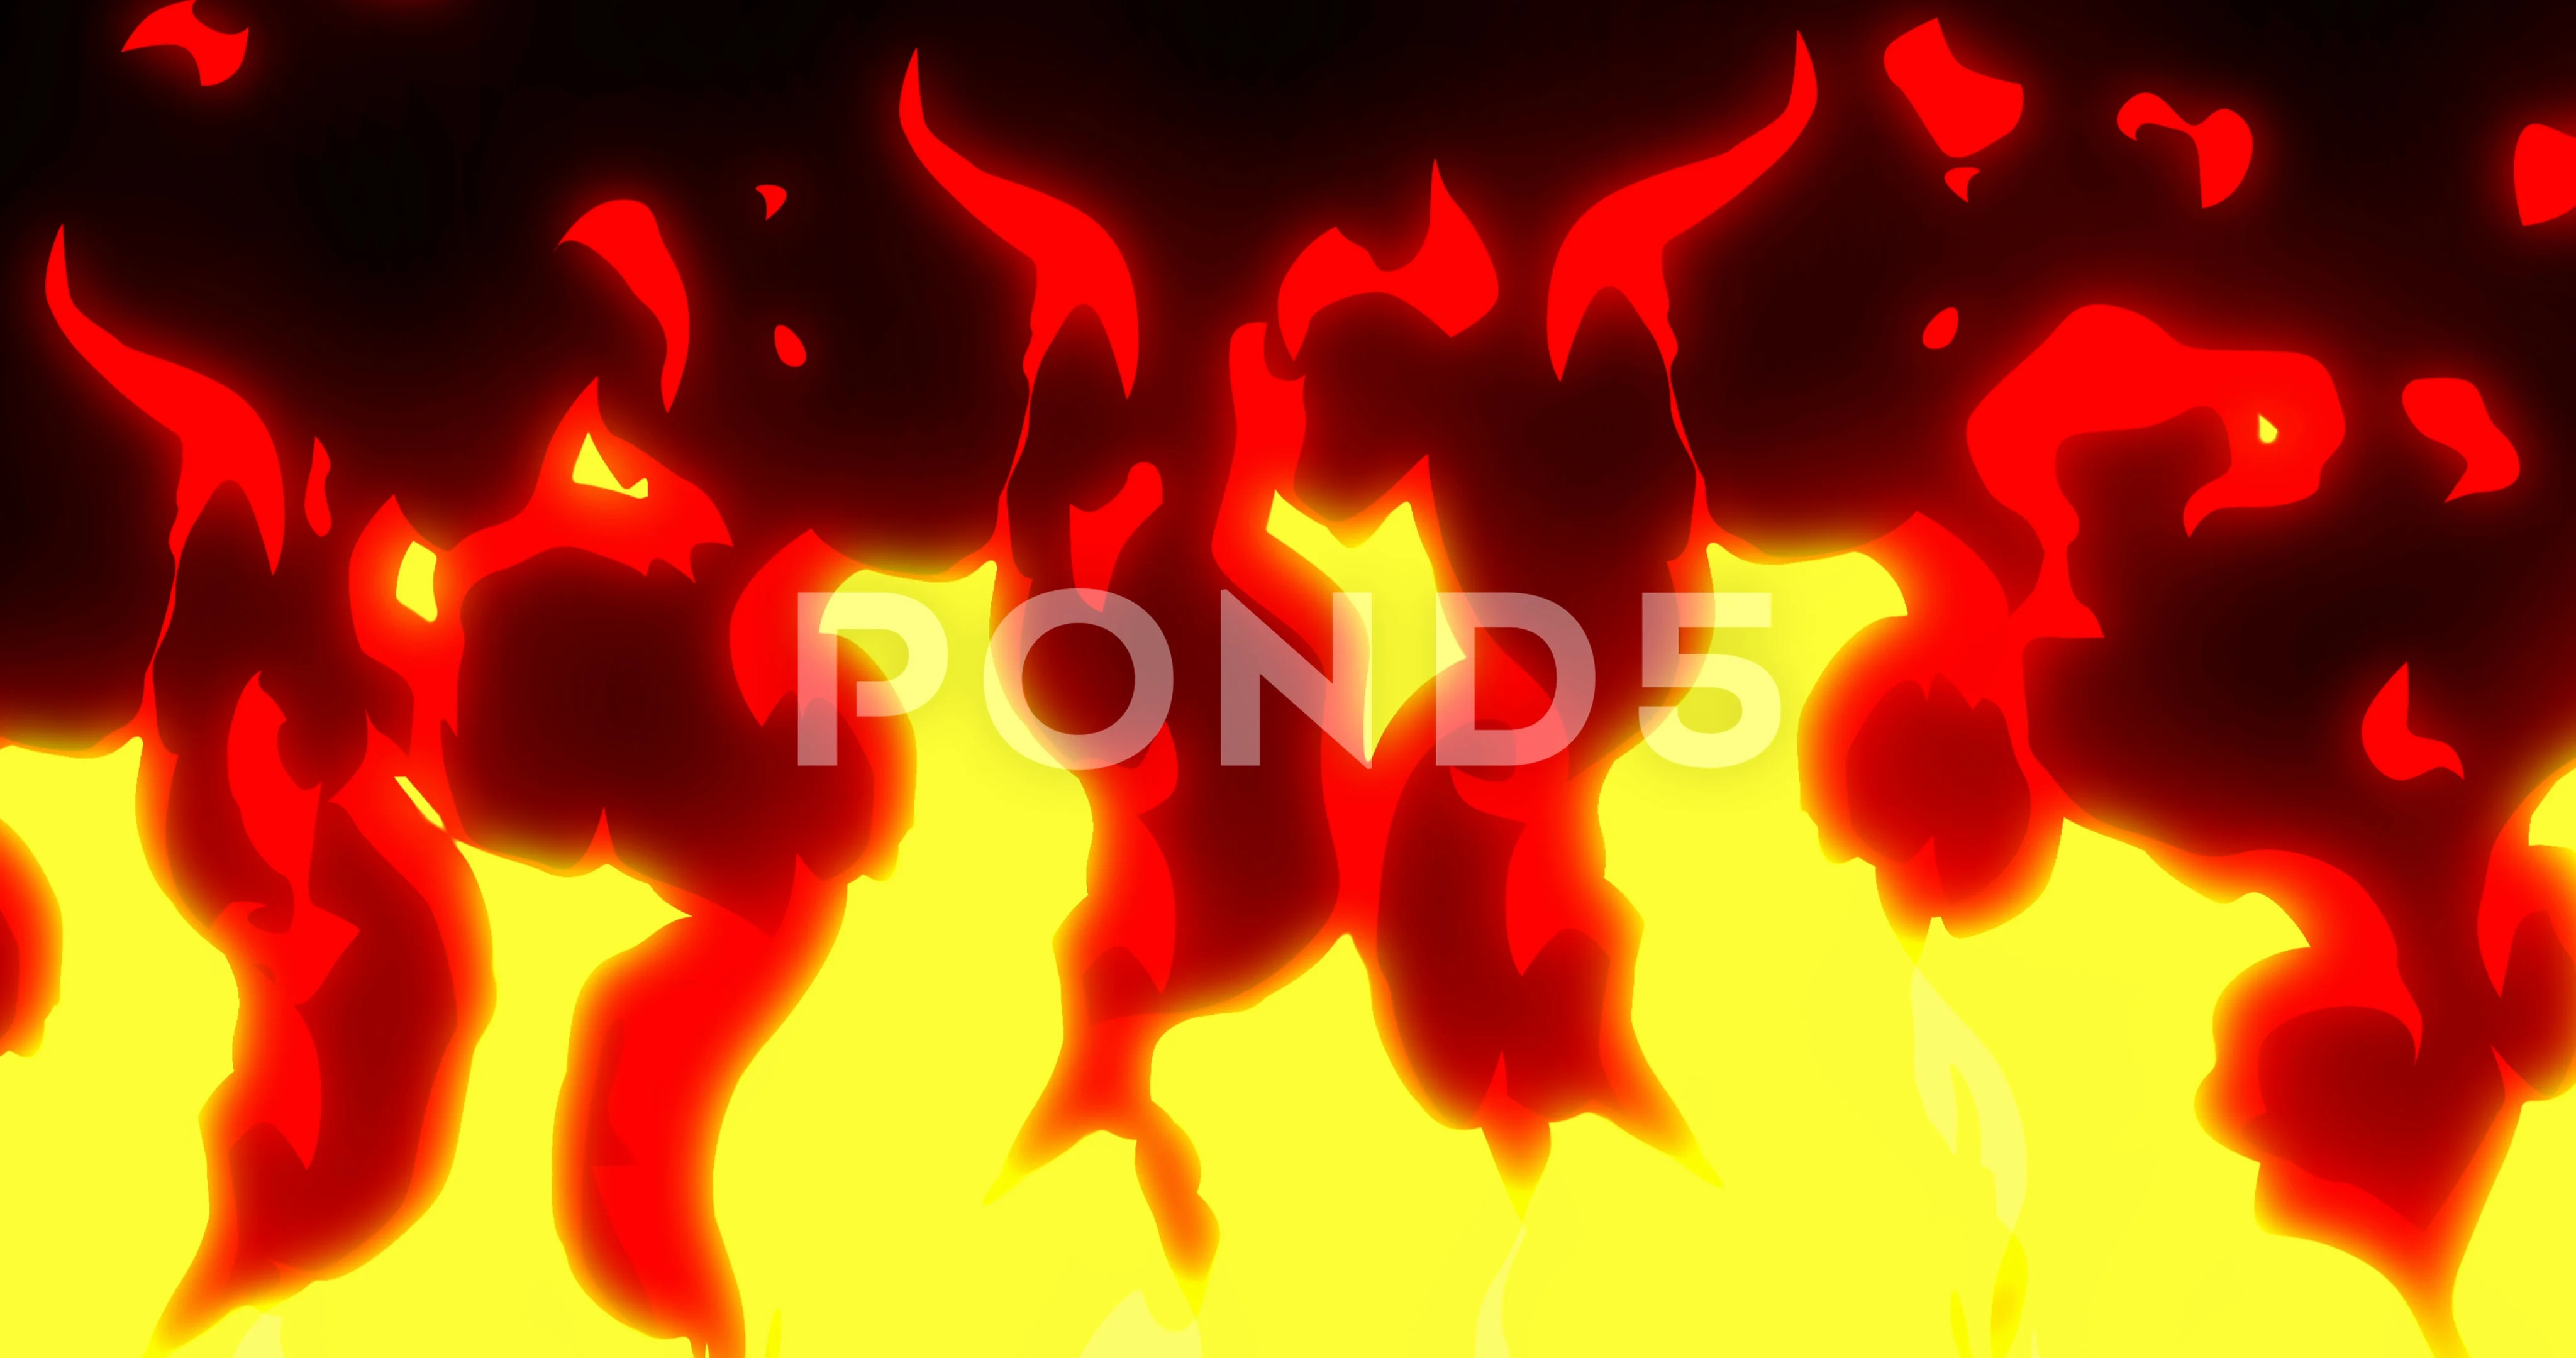 02 - 2D Cartoon Fire Animation 4k Fireba... | Stock Video | Pond5